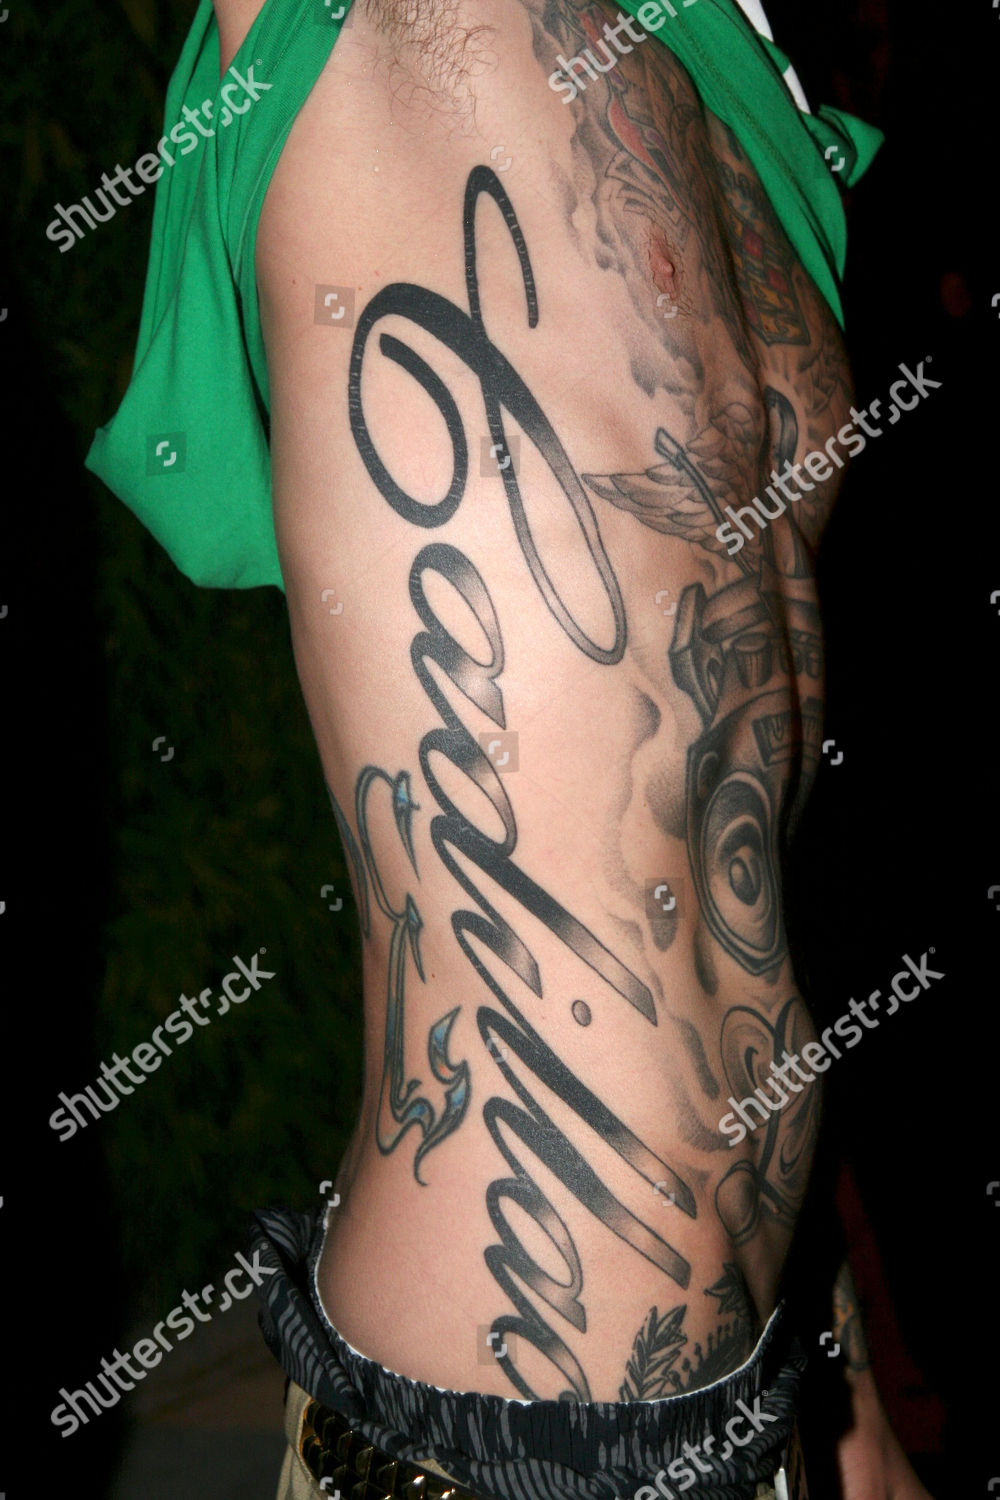 Tattoo uploaded by Ross Howerton  Travis Barkers kickass Cadillac tattoo  Caddy Cadillac lettering TravisBarker  Tattoodo